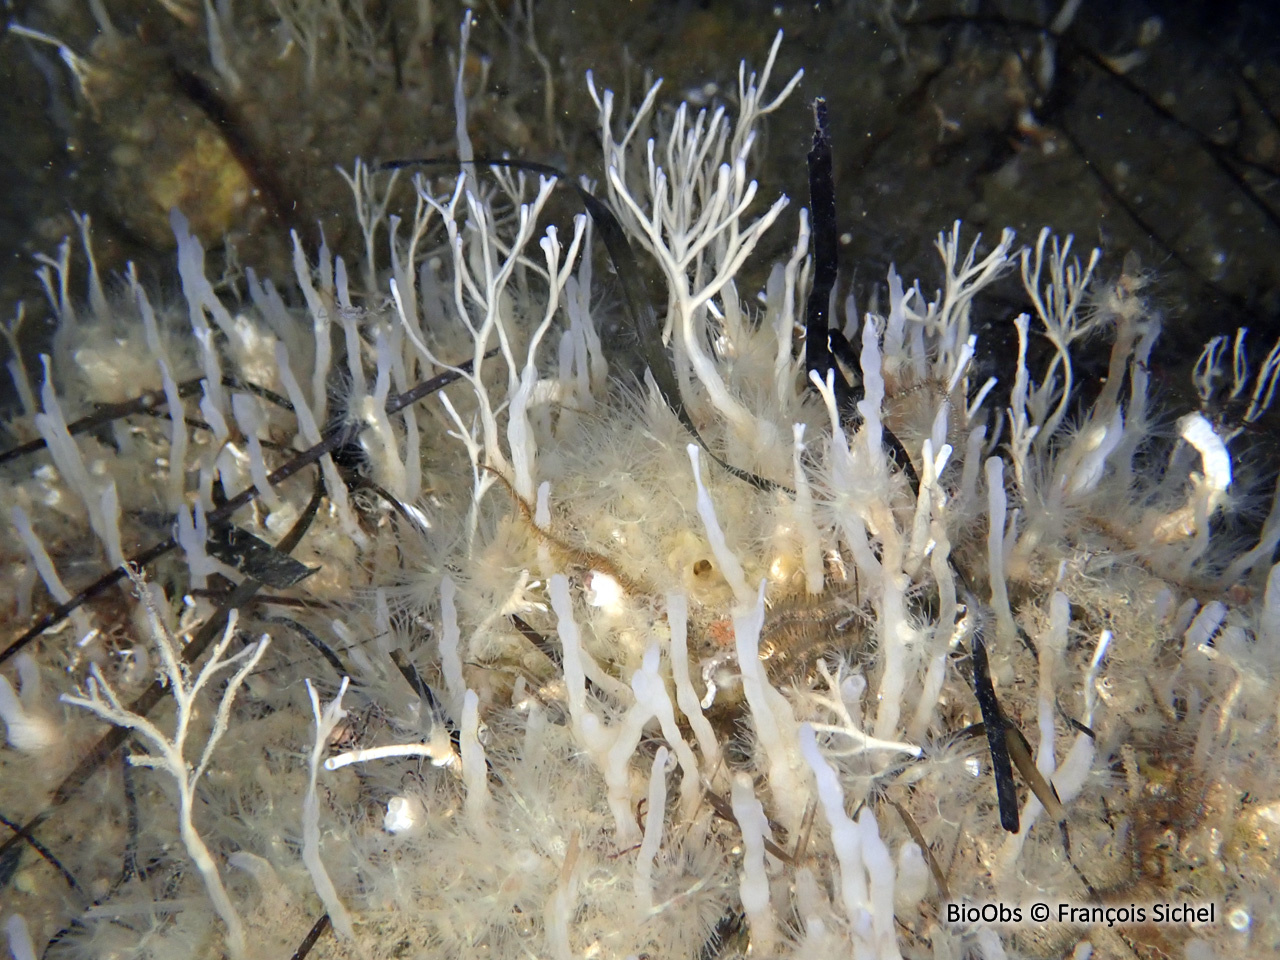 Eponge-fistule blanc-fauve - Oceanapia isodictyiformis - François Sichel - BioObs